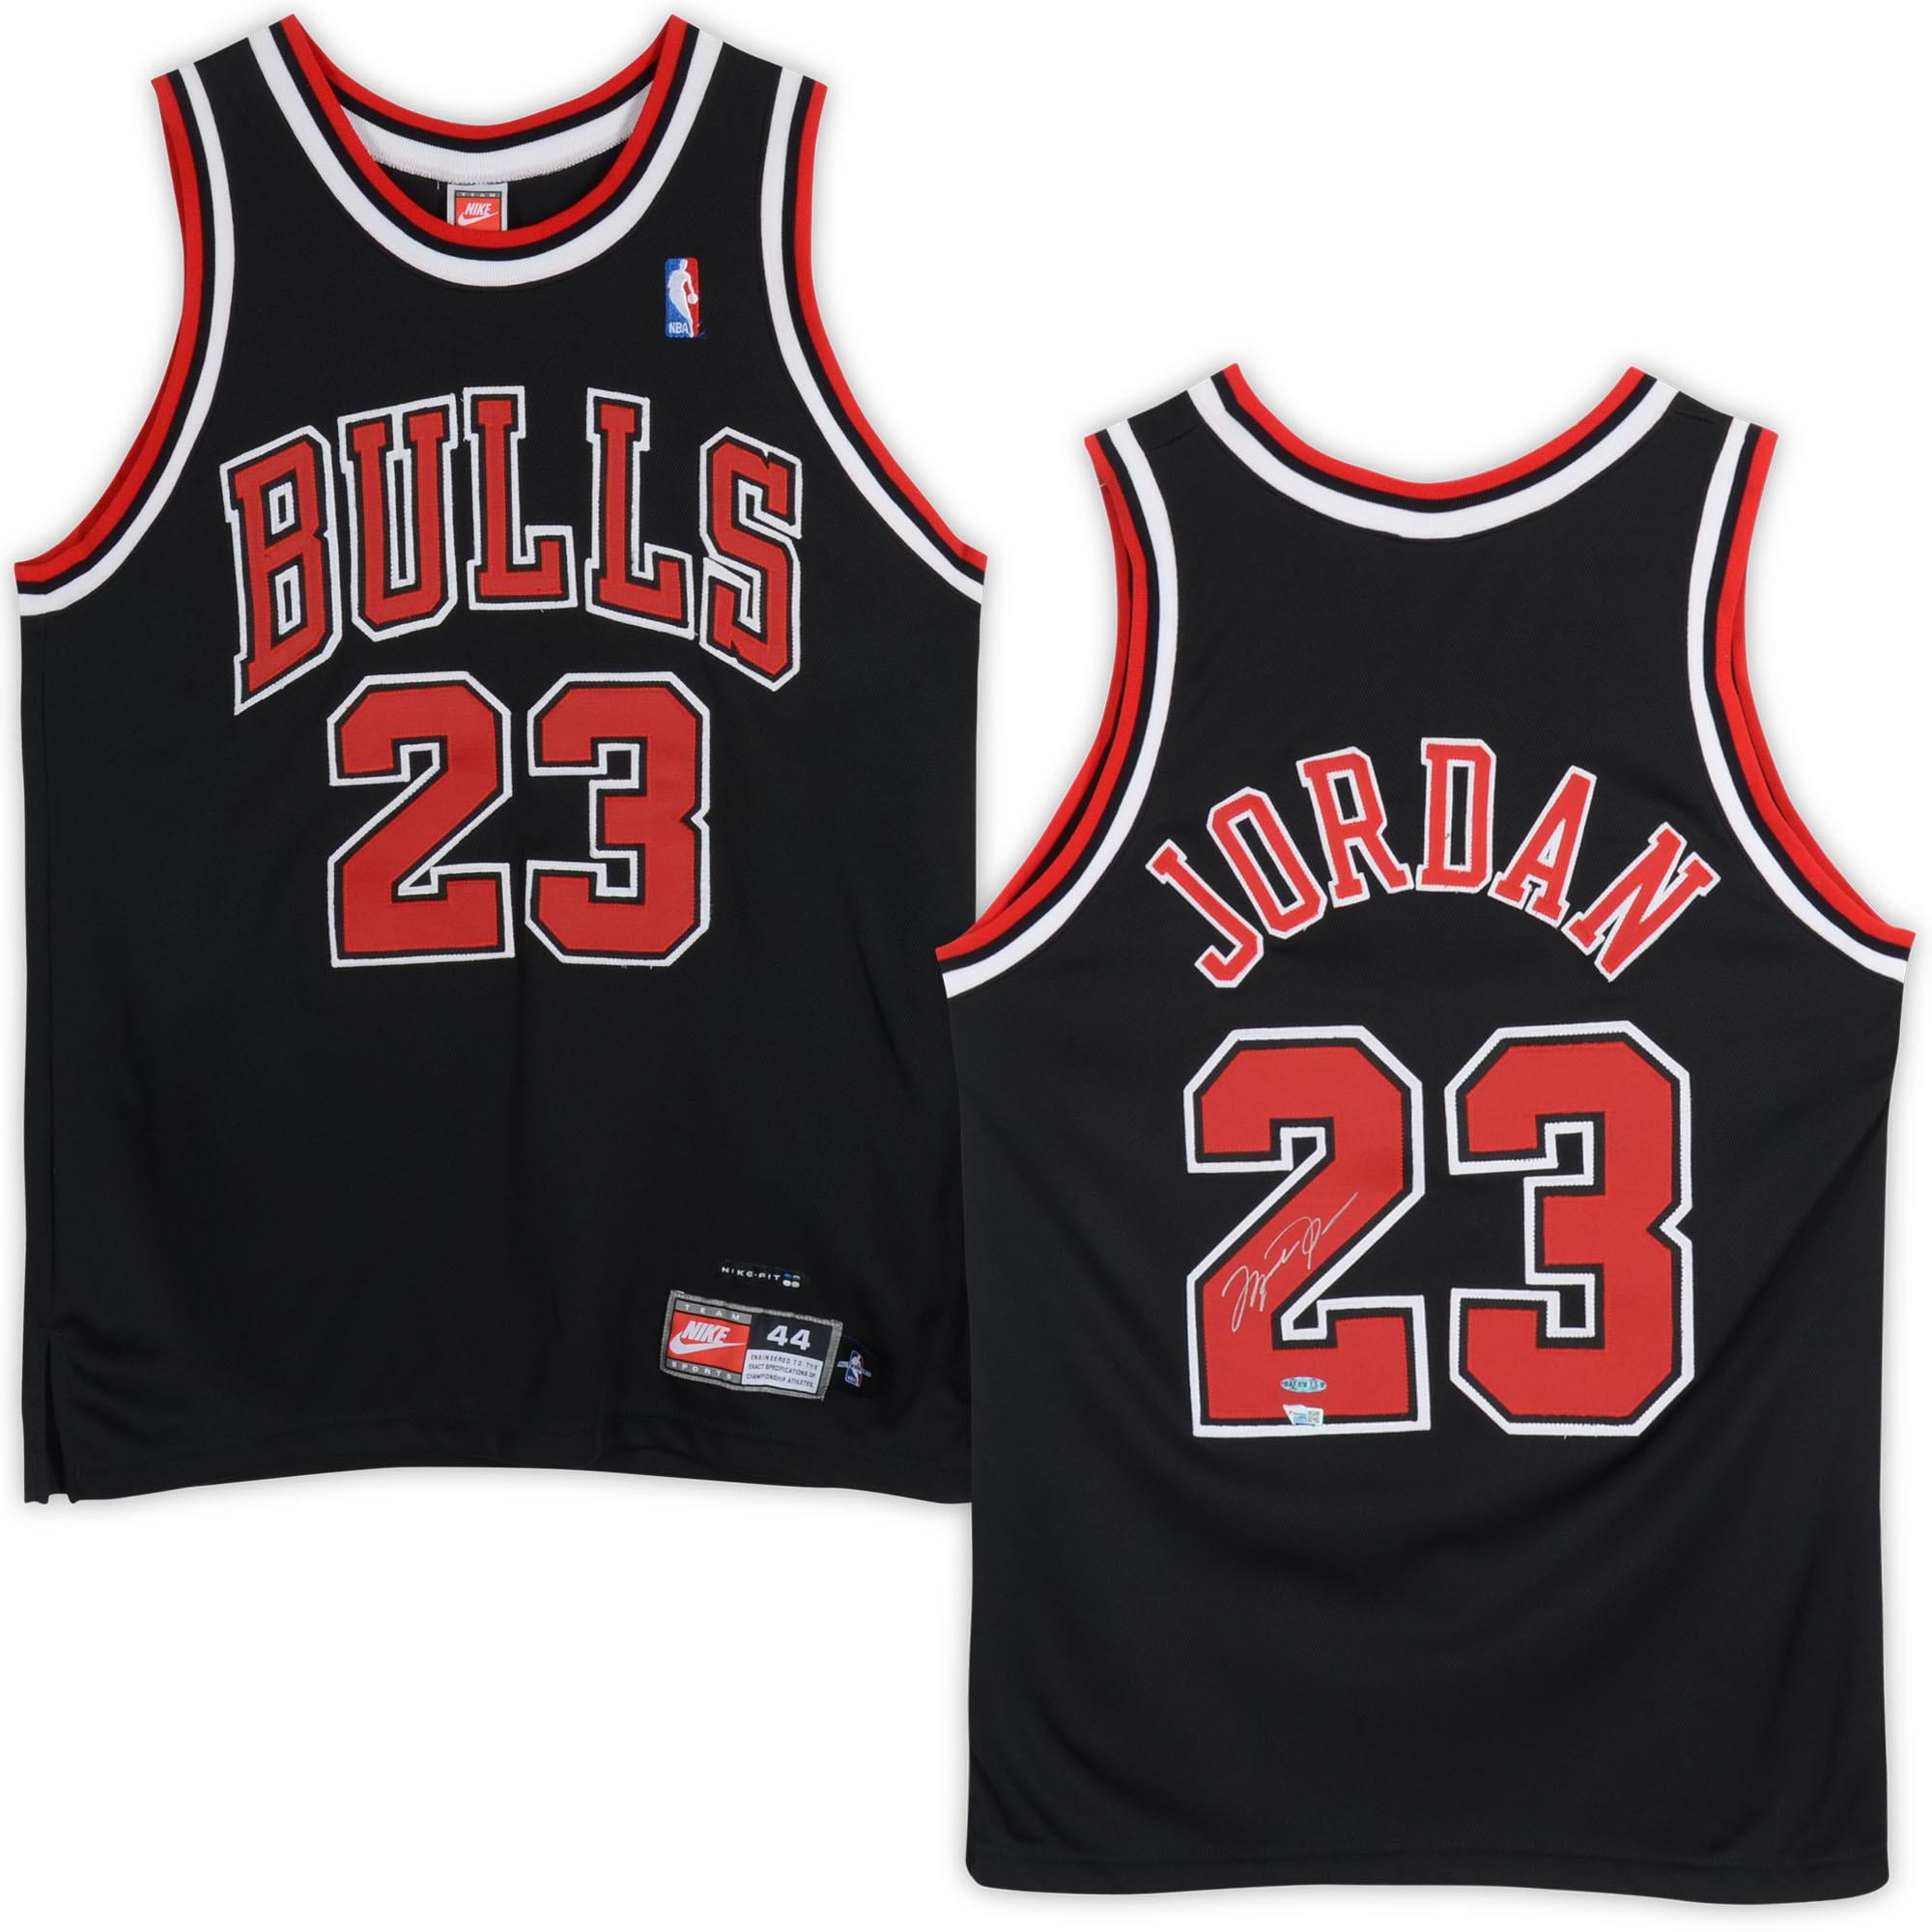 rig Tale vakuum Michael Jordan Chicago Bulls Autographed Black Jersey - Upper Deck -  Fanatics Authentic Certified - Walmart.com